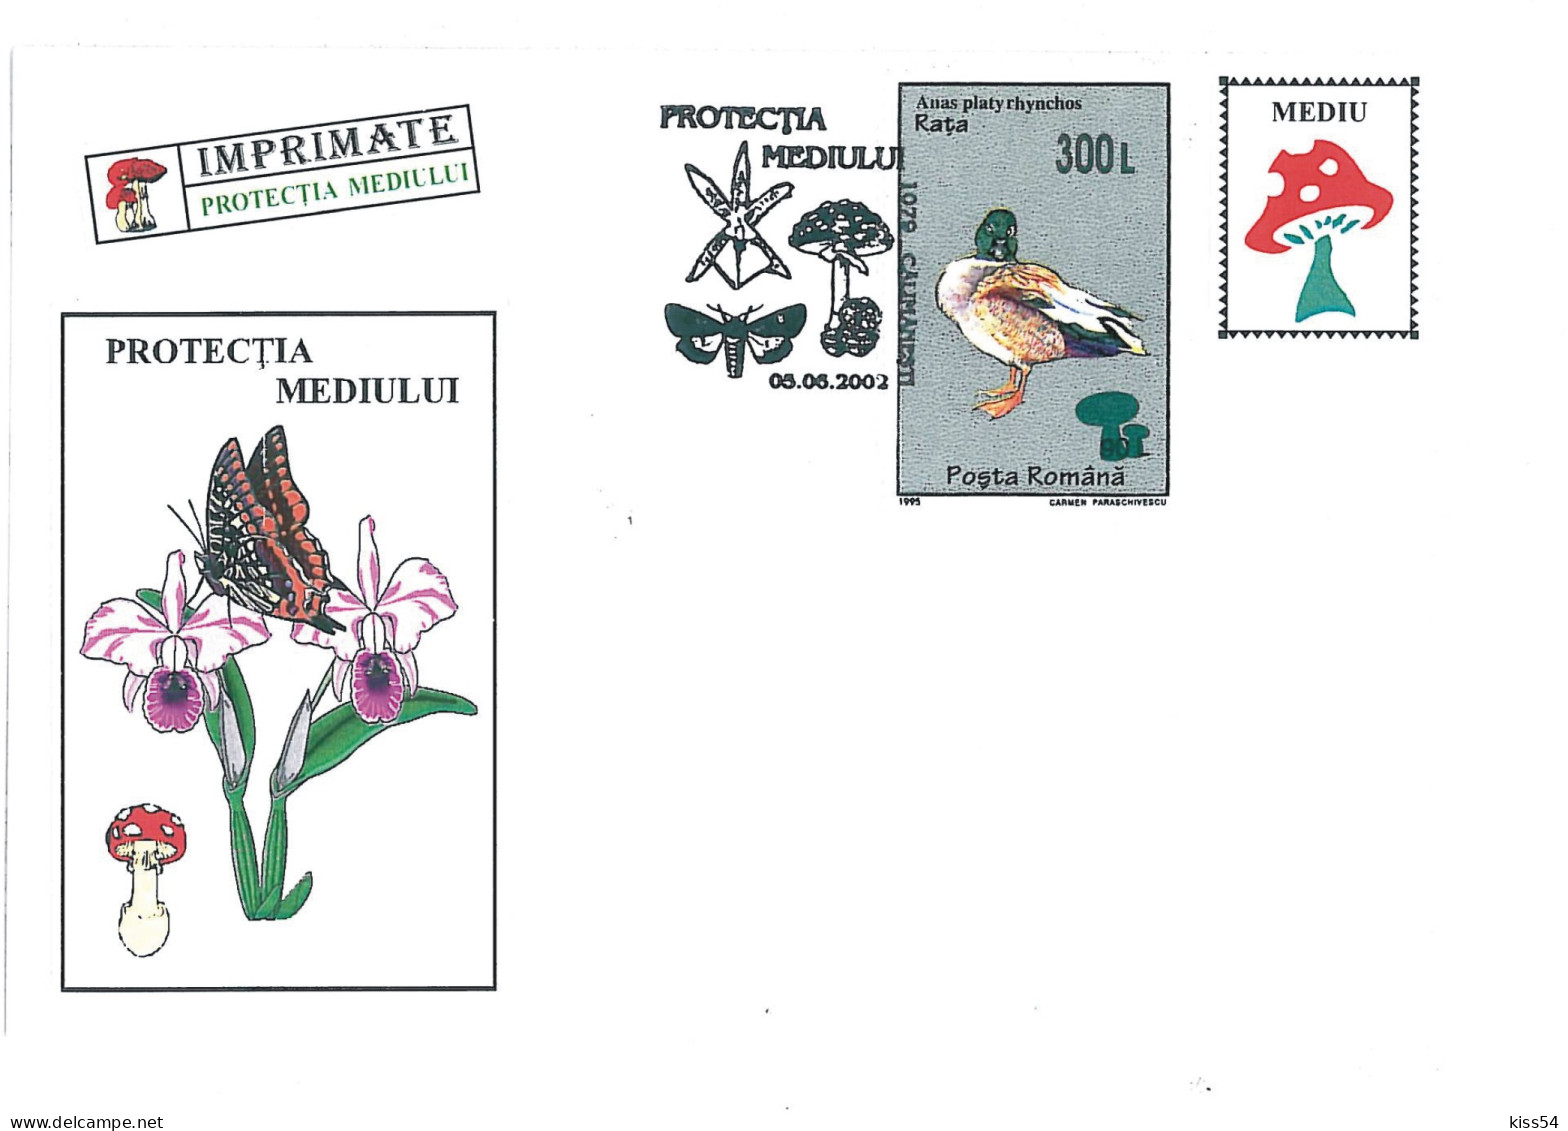 COV 22 - 1743 MUSHROOM, Environmental Protection, Romania - Cover - Used - 2002 - Maximumkarten (MC)